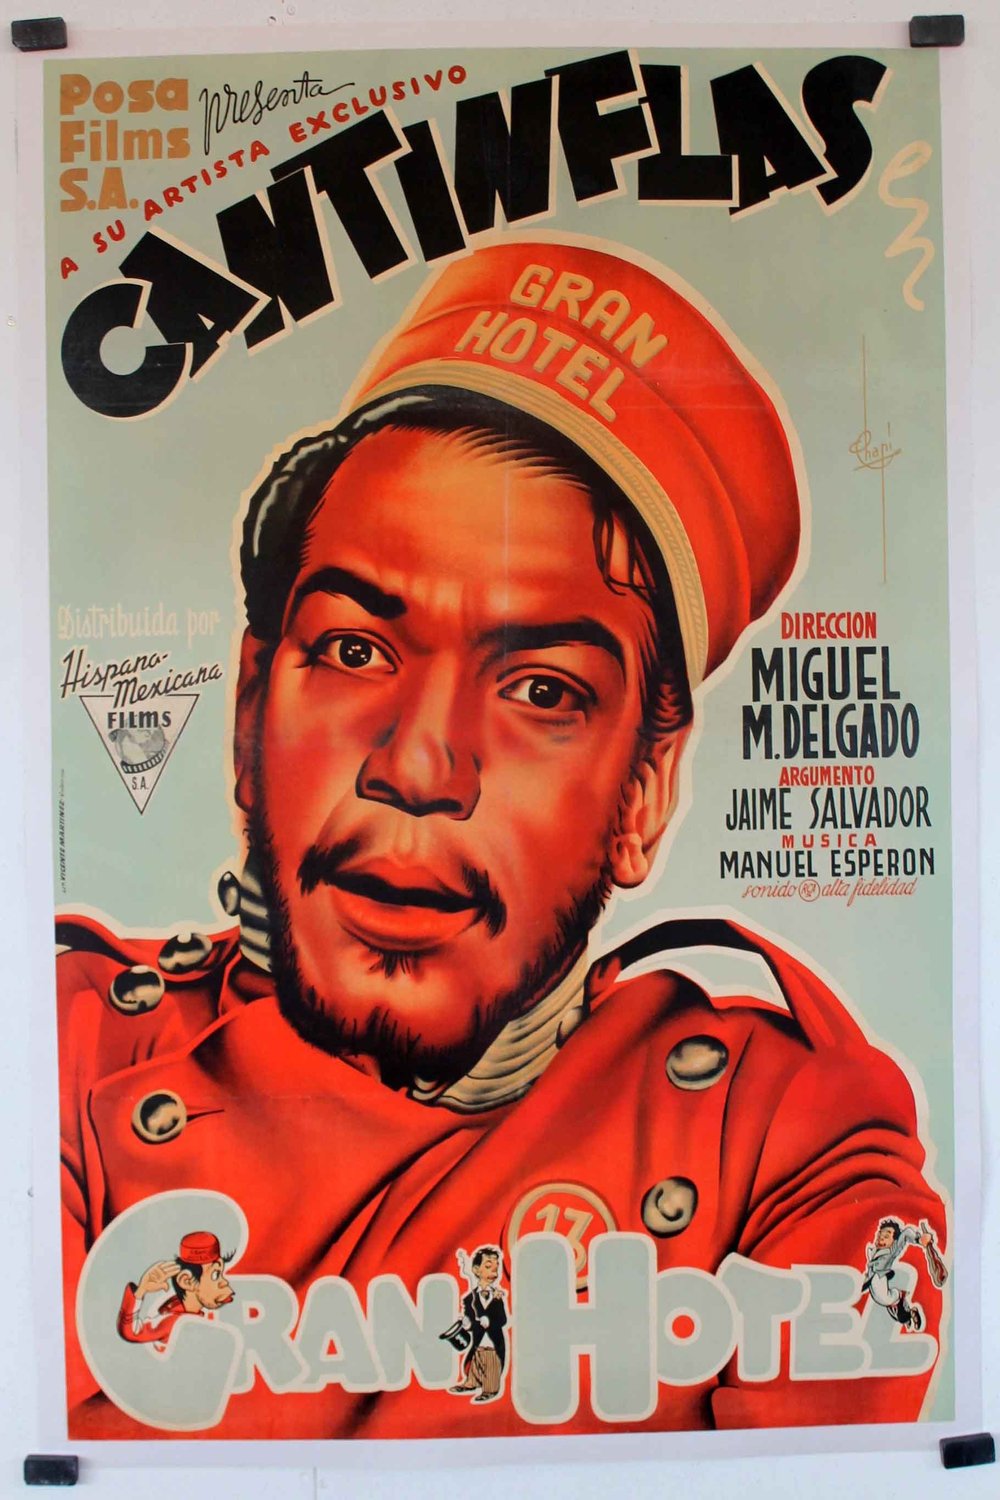 L'affiche originale du film Gran Hotel en espagnol